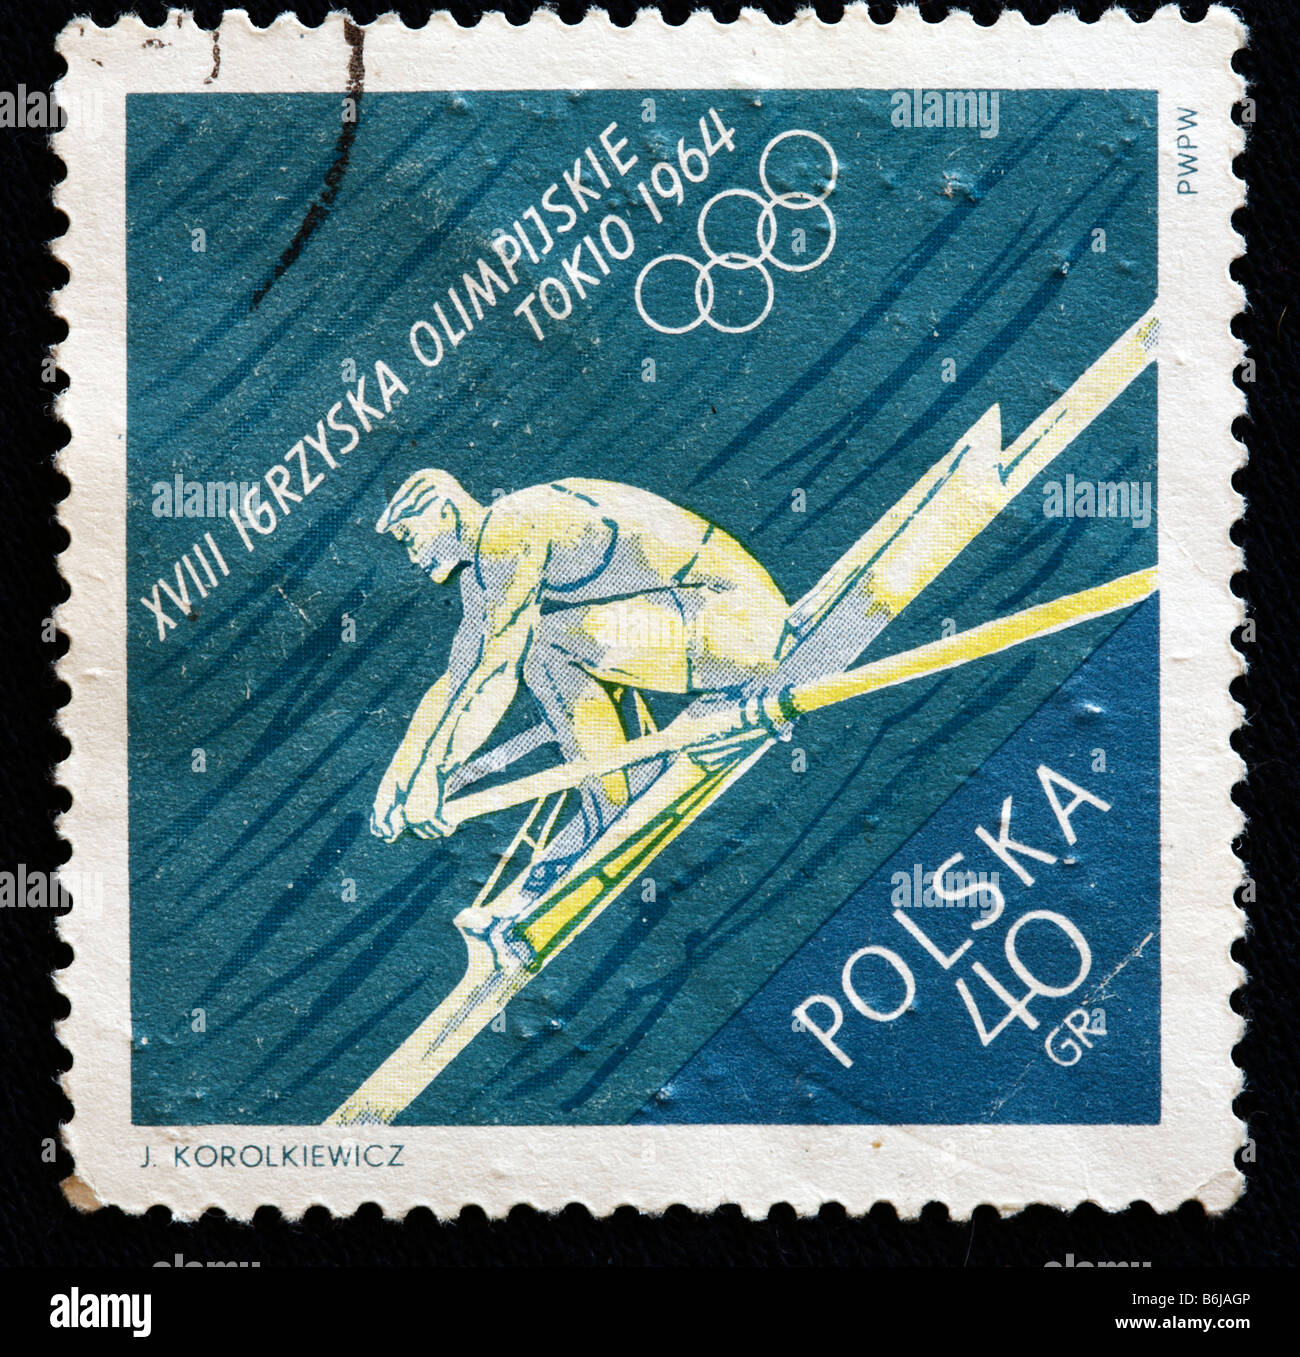 XVIII Olympic games, Tokyo, 1964, postage stamp, Poland, 1964 Stock Photo